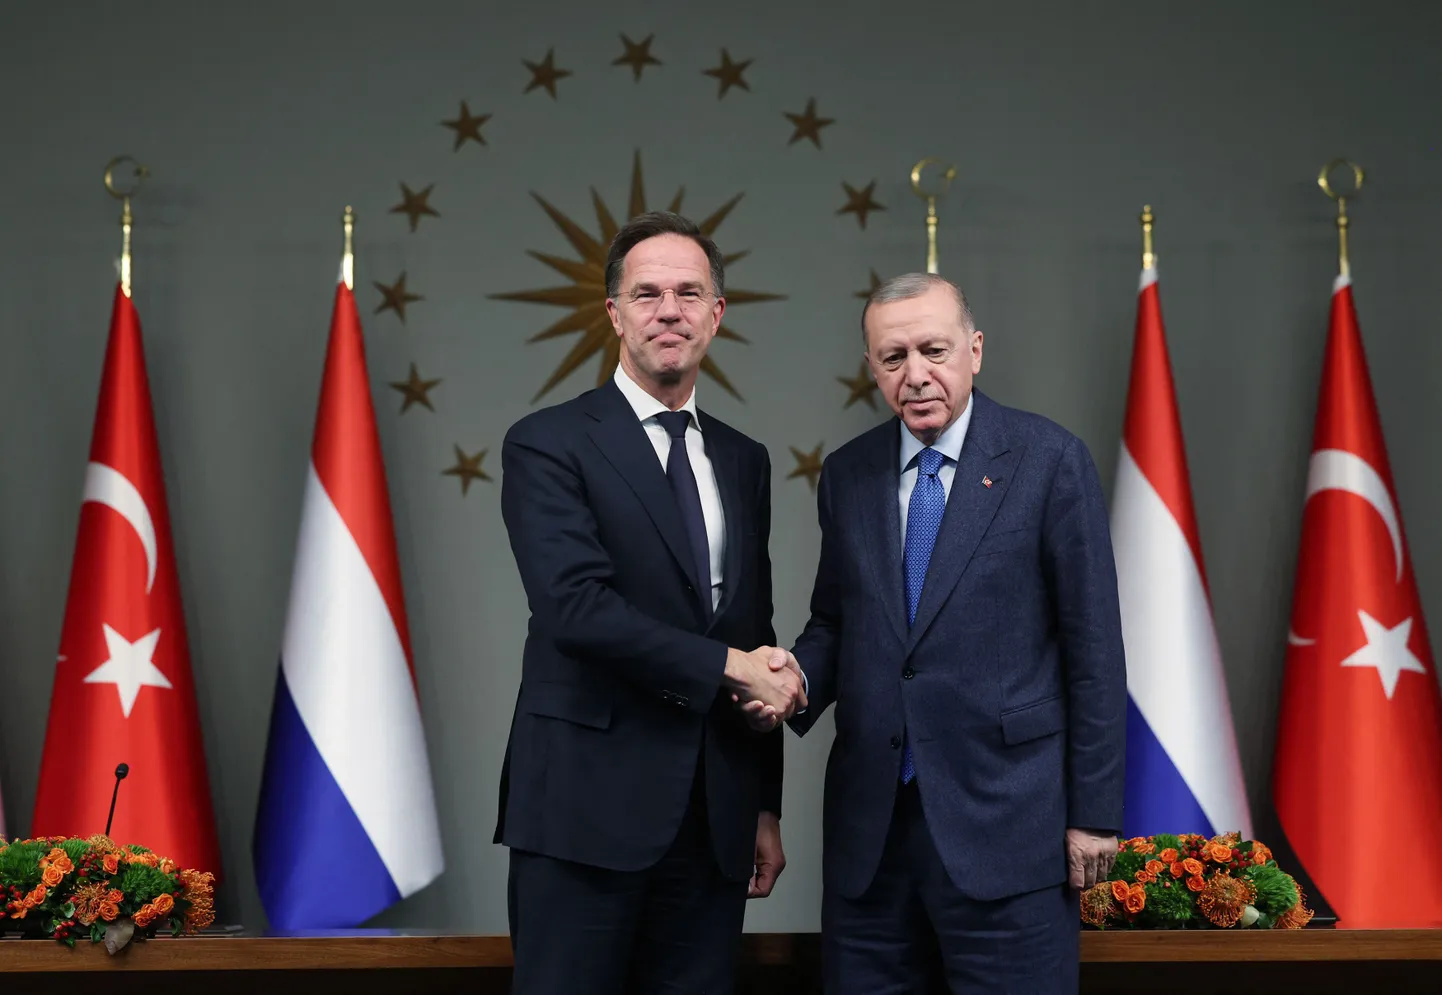 Hollandi peaminister Mark Rutte kohtus reedel Istanbulis Türgi president Recep Tayyip Erdoganiga.